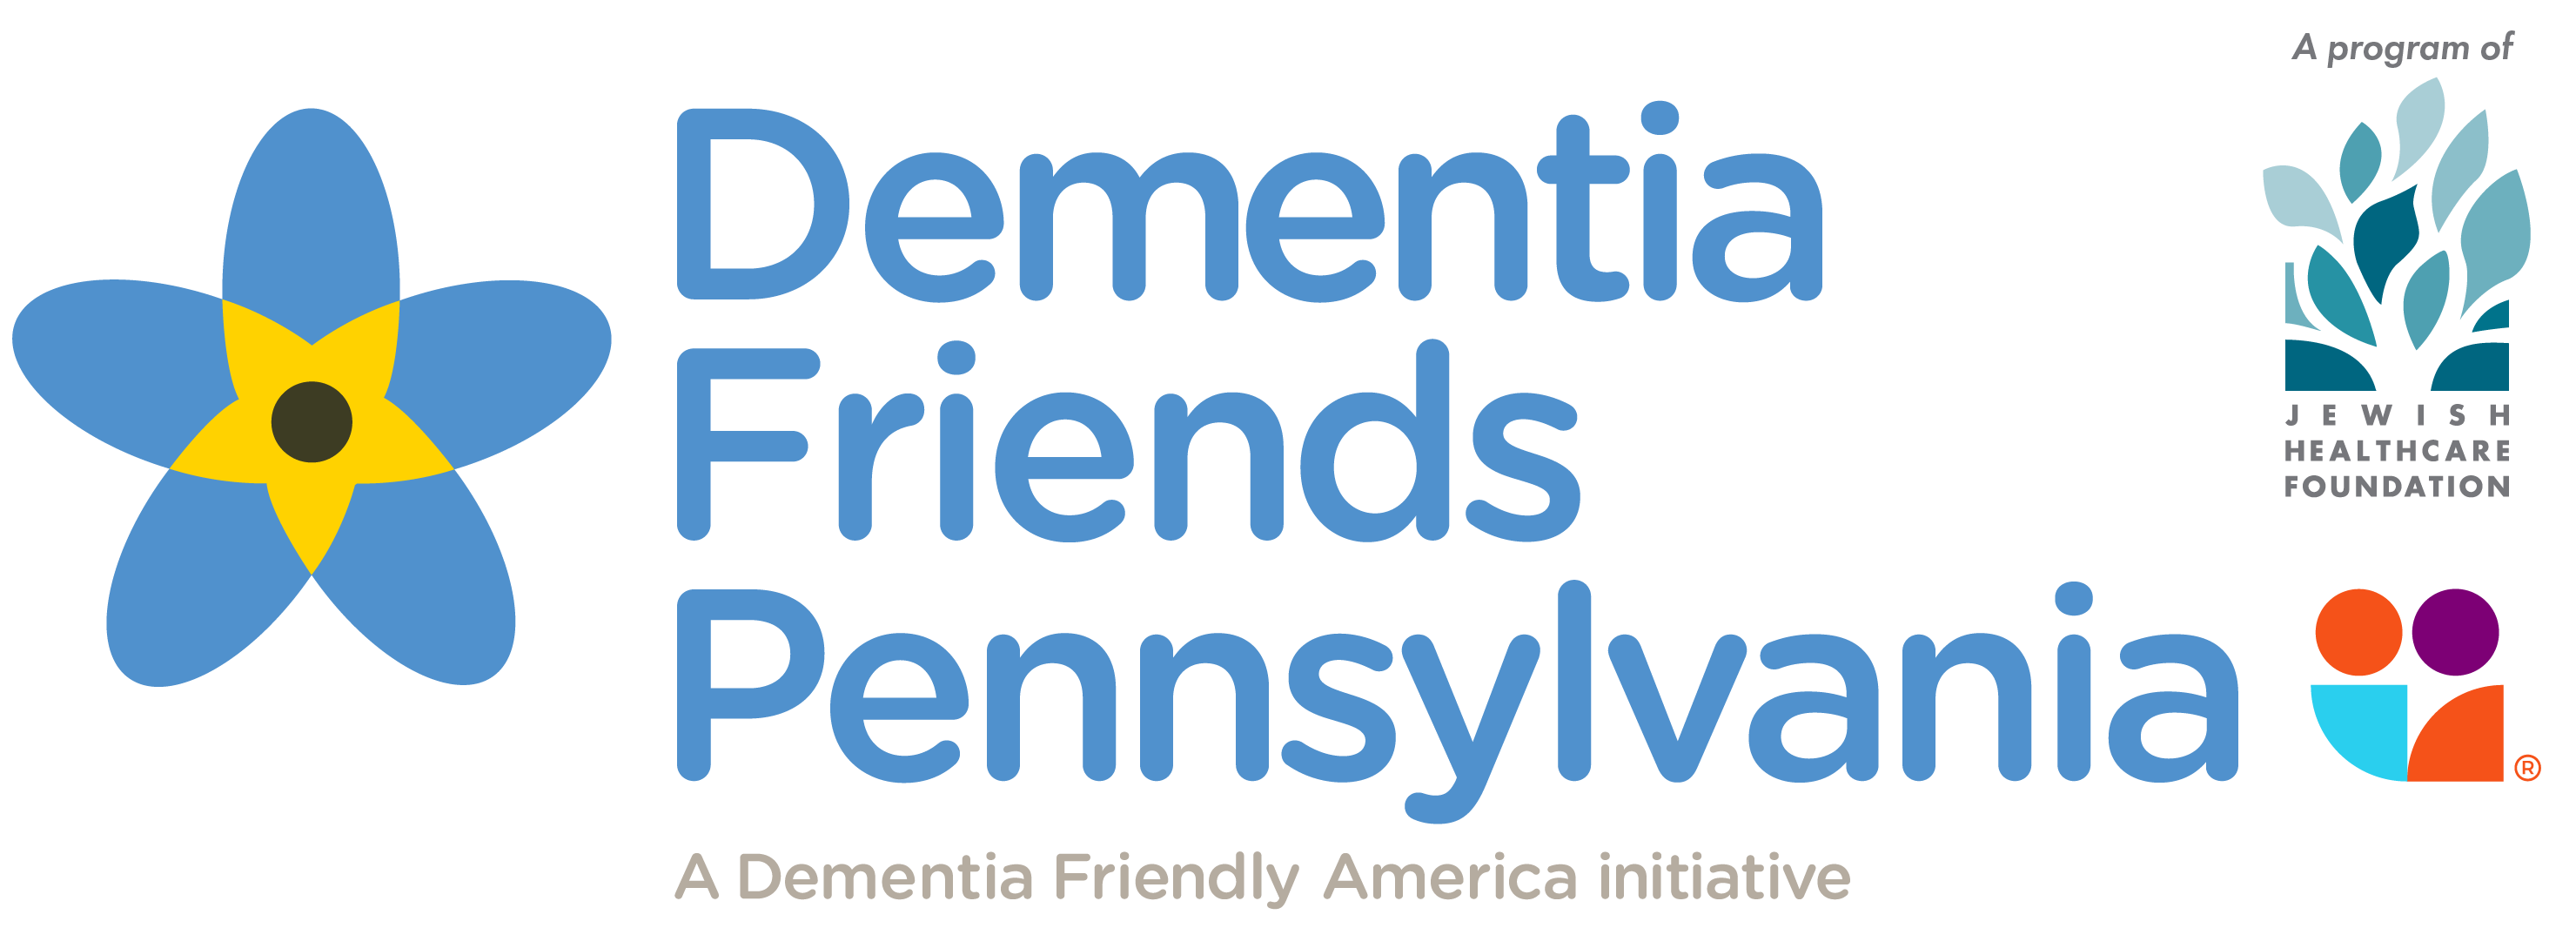 Dementia Friends PA logo with Jewish Healthcare Foundation logo